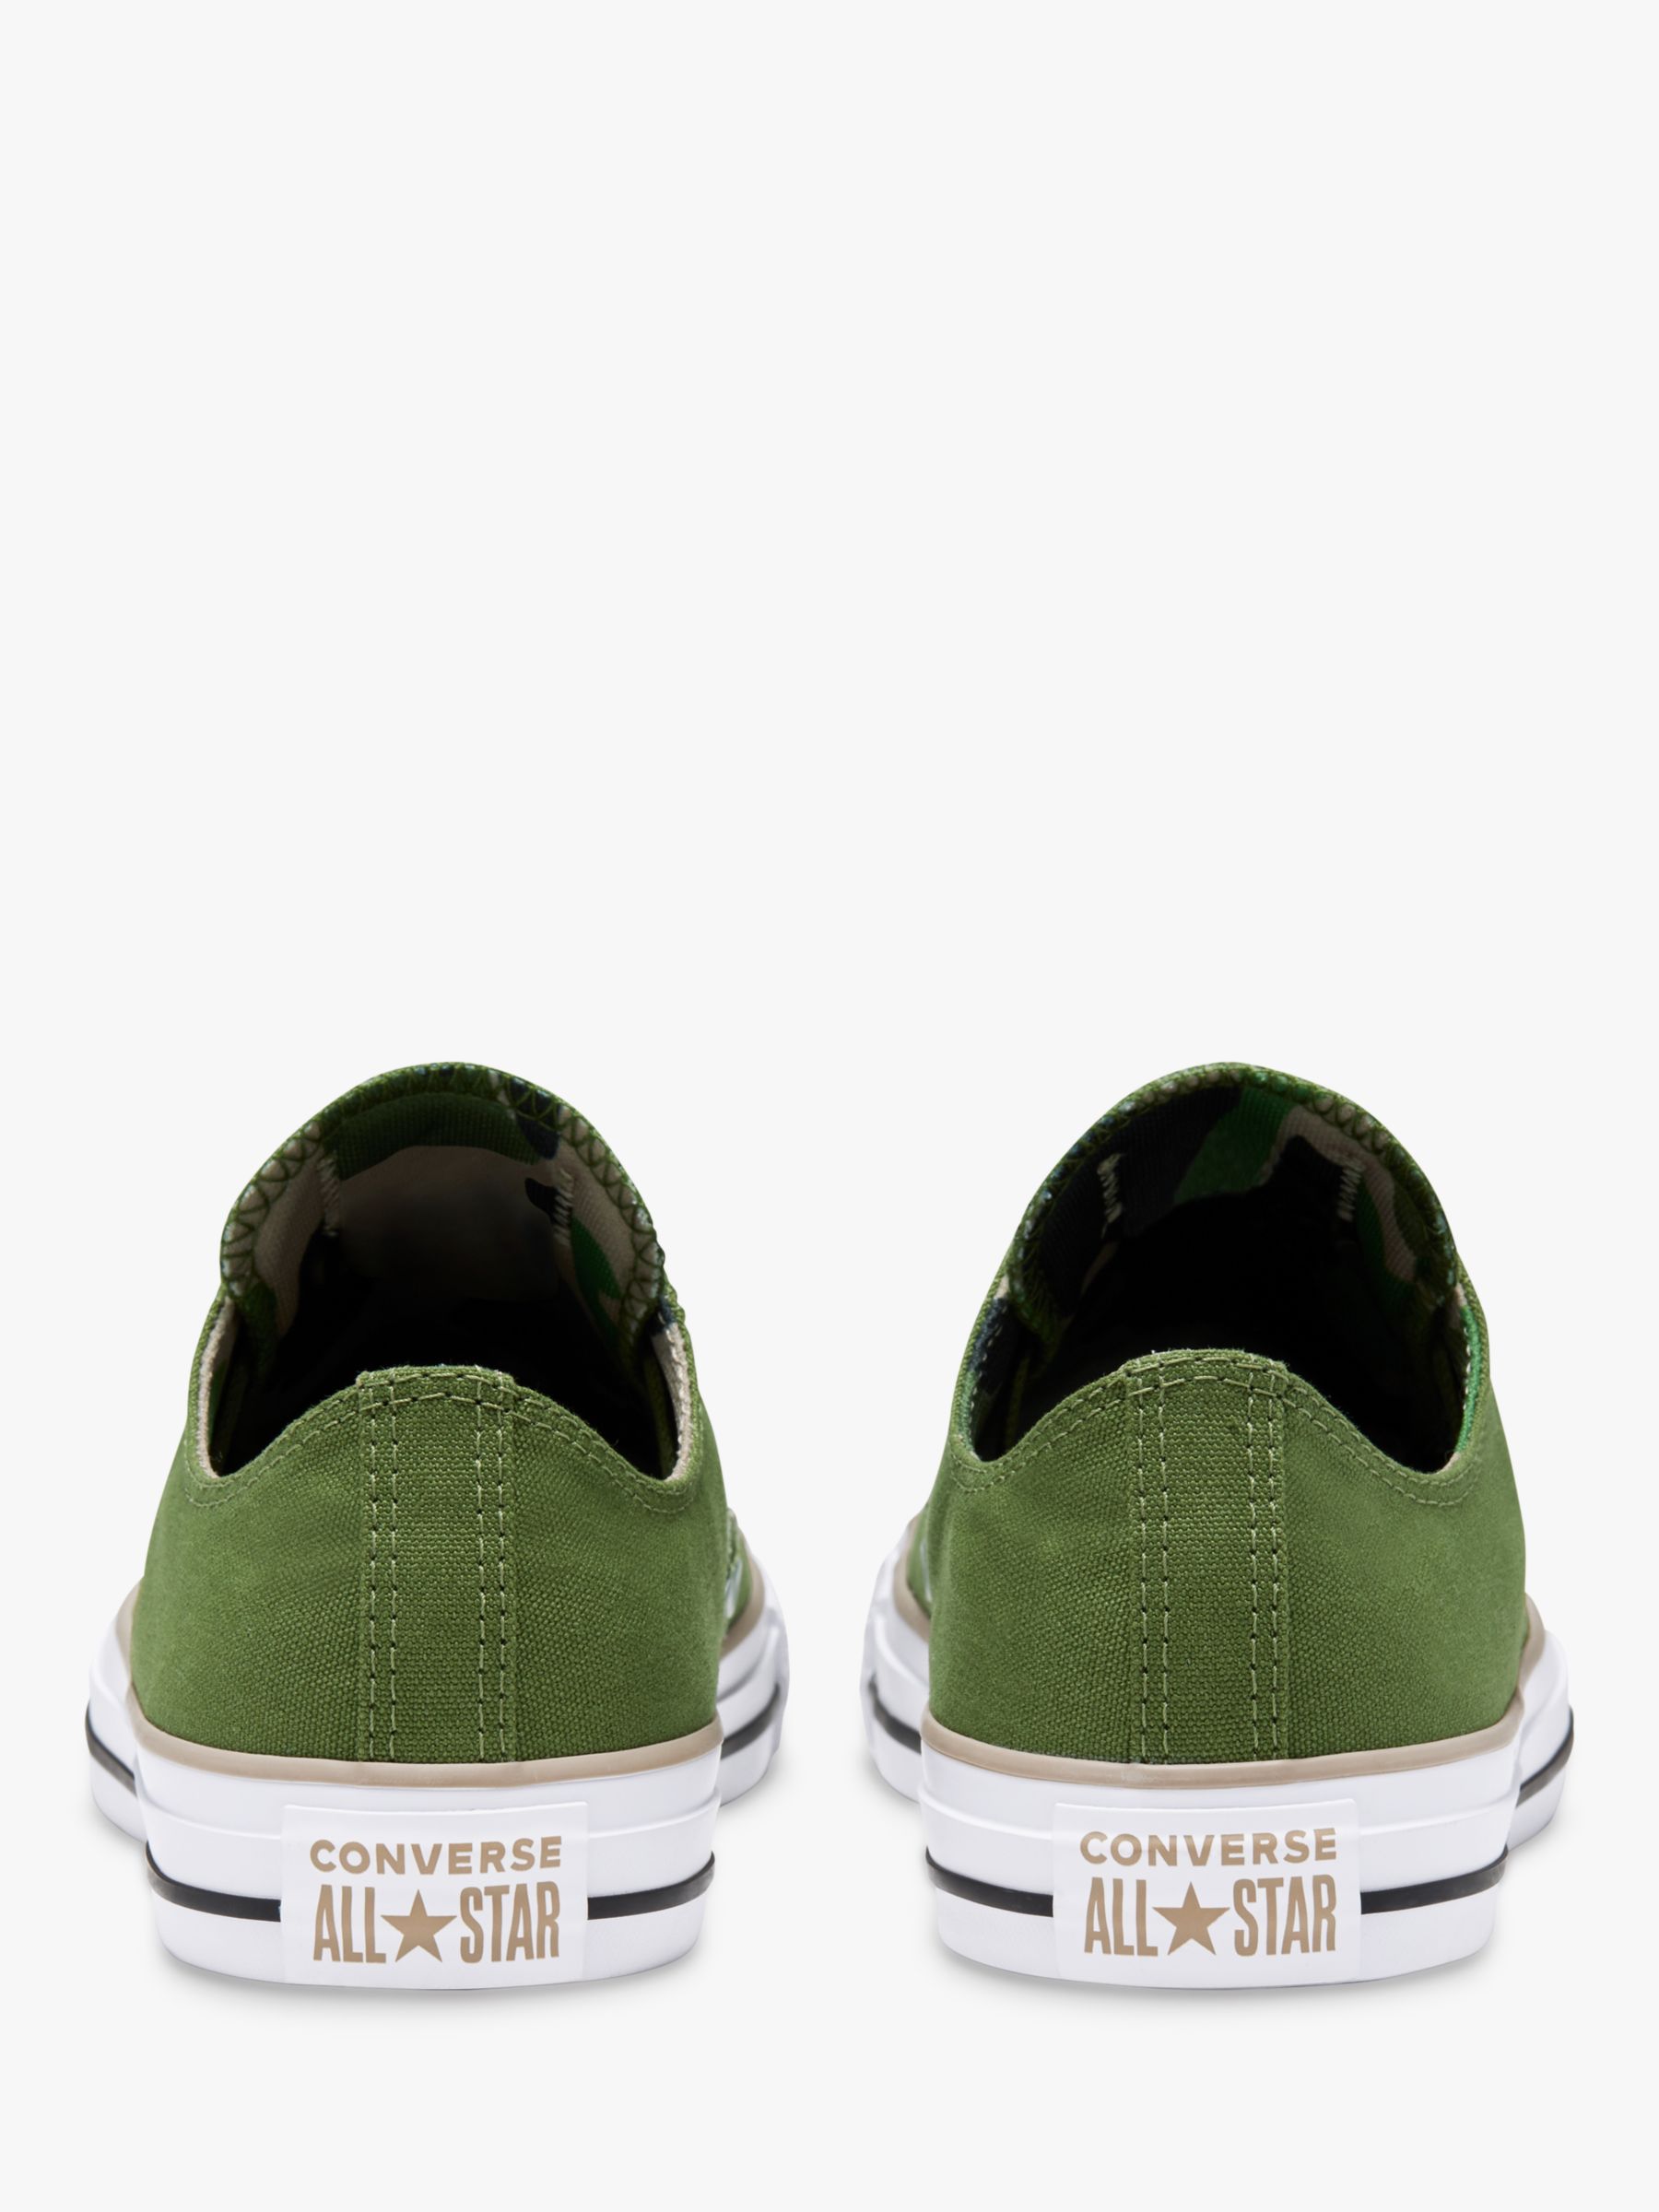 converse boots green